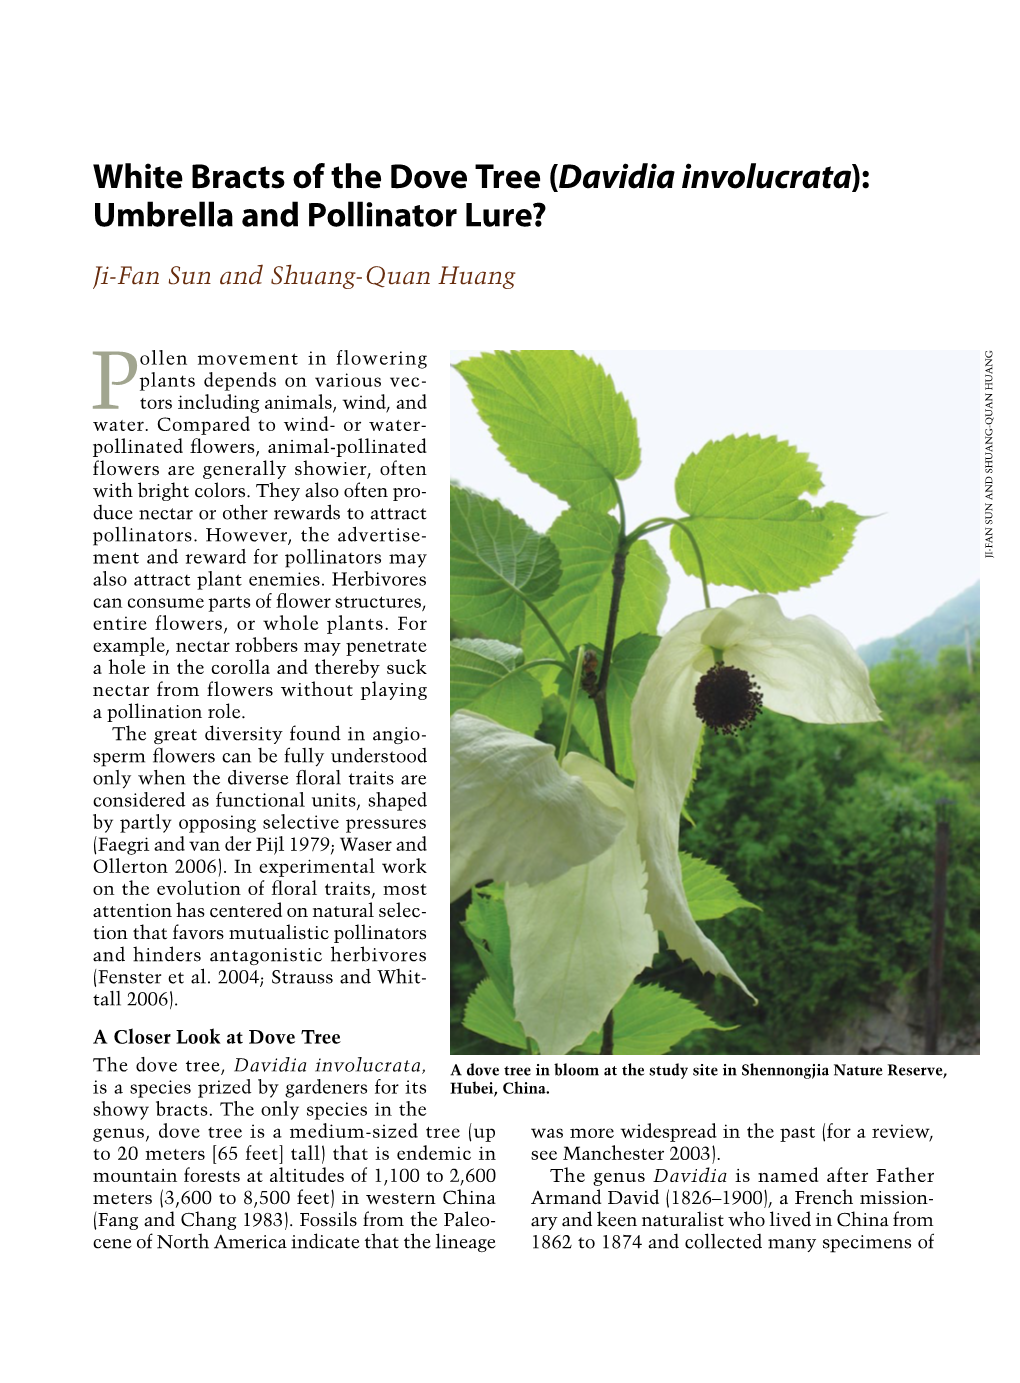 Davidia Involucrata): Umbrella and Pollinator Lure?